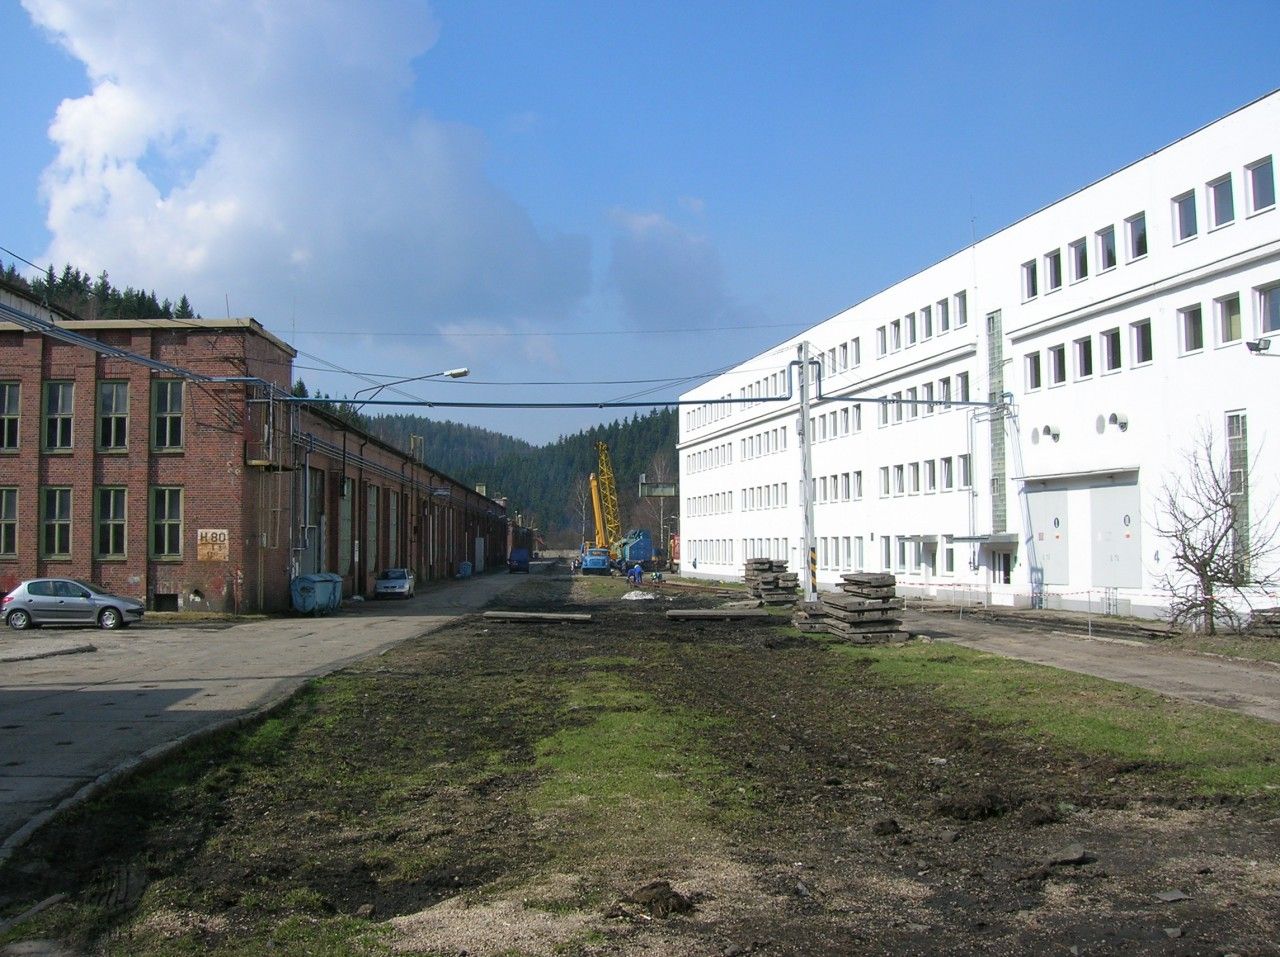 2006 konec eleznice v Rotasu